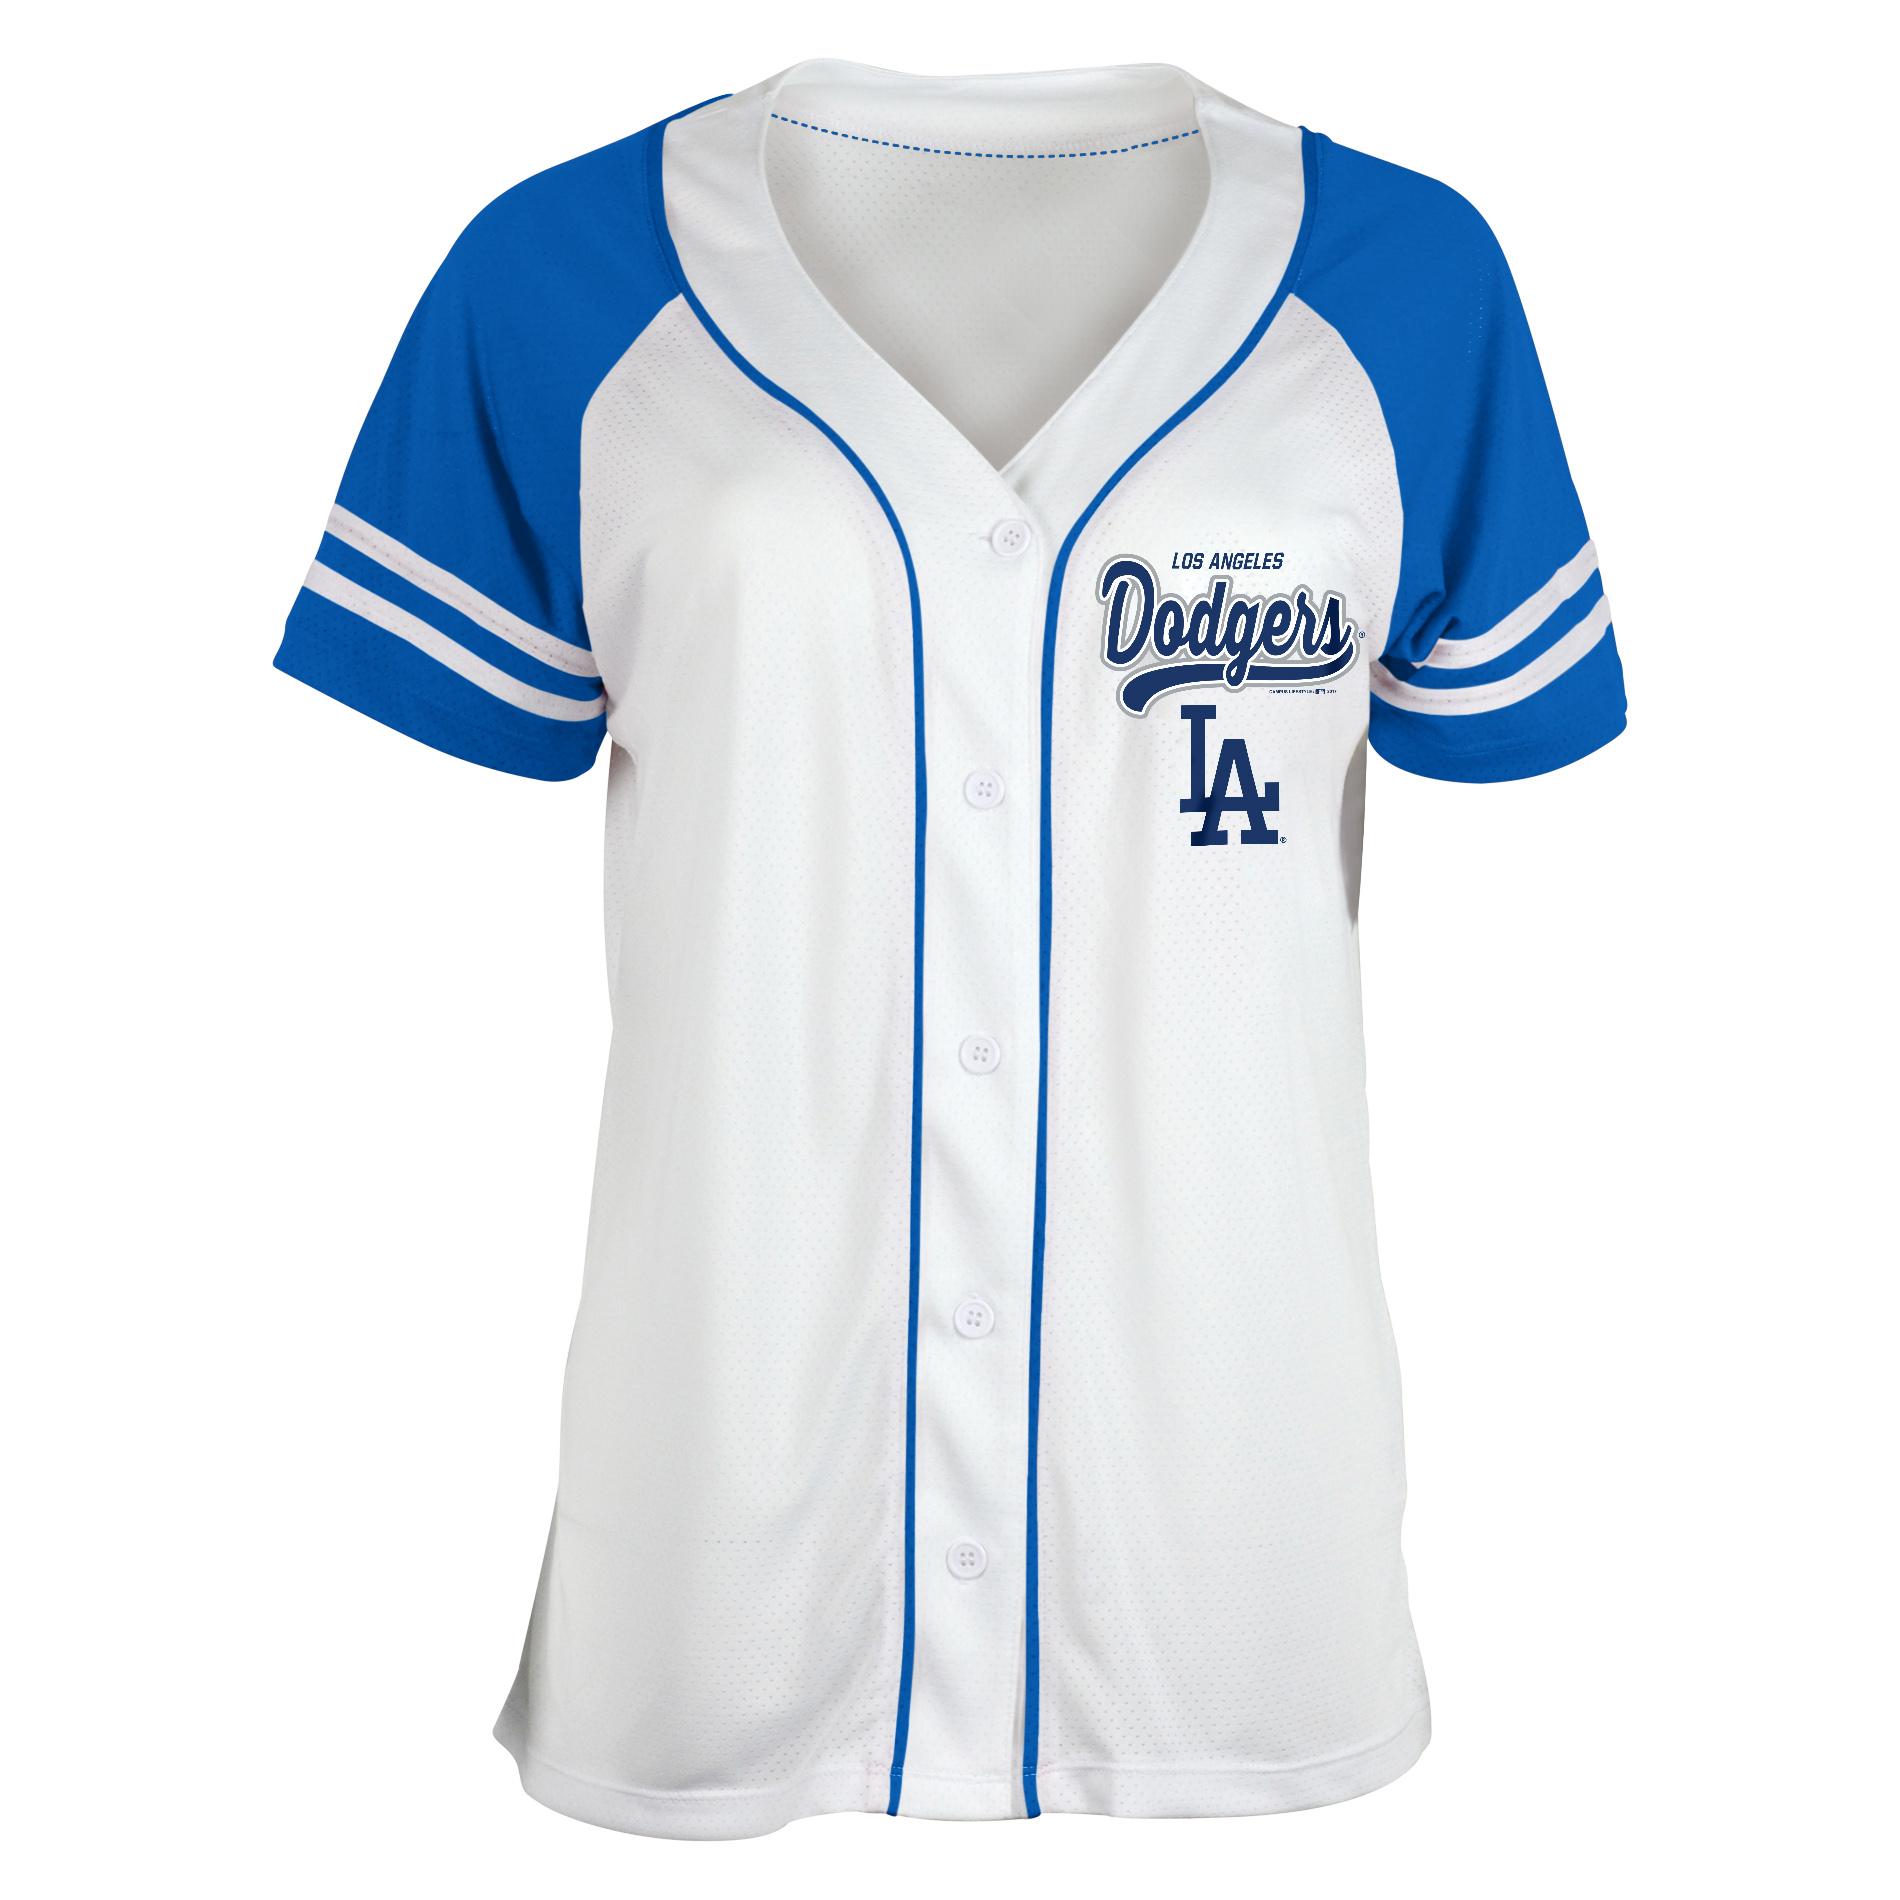 MLB Women's Jersey - Los Angeles Dodgers